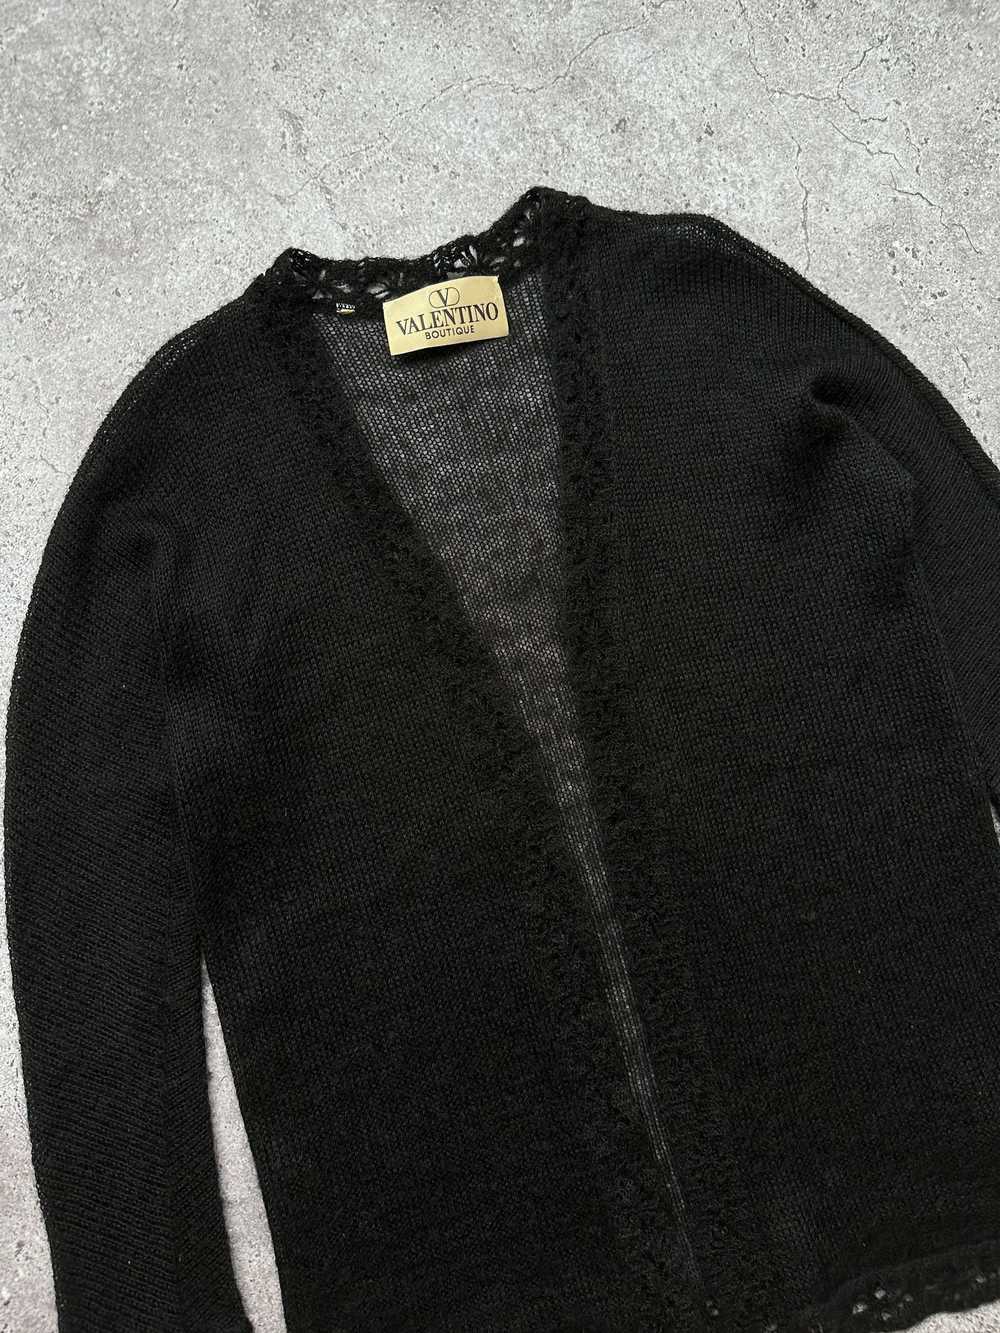 Valentino Valentino Boutique Knit Cardigan Sweater - image 2